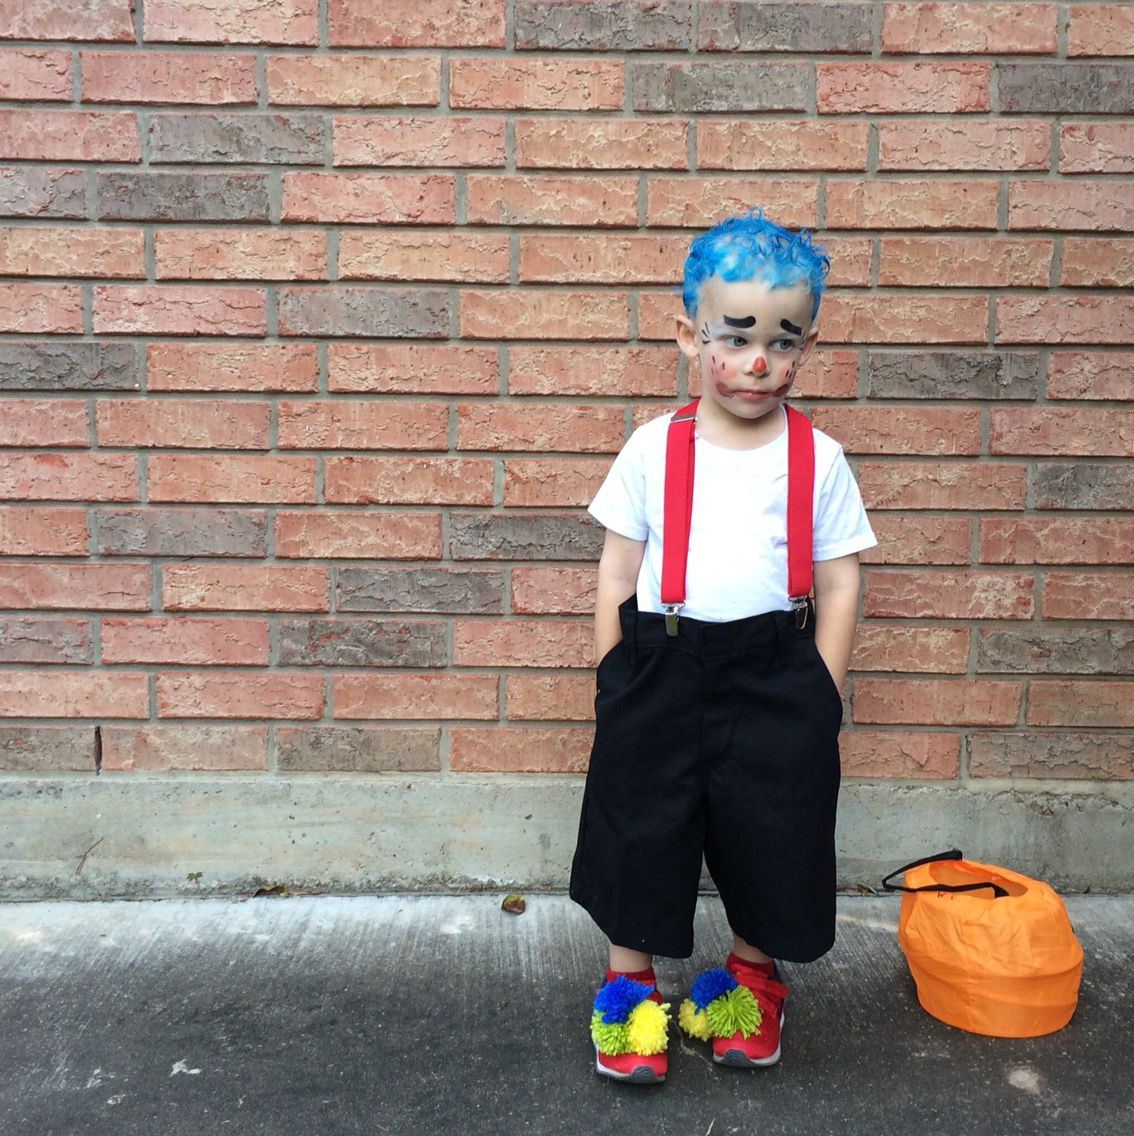 Best ideas about DIY Boys Halloween Costumes
. Save or Pin DIY Kids Boy Clown Halloween Costume Yarn Pom poms Now.